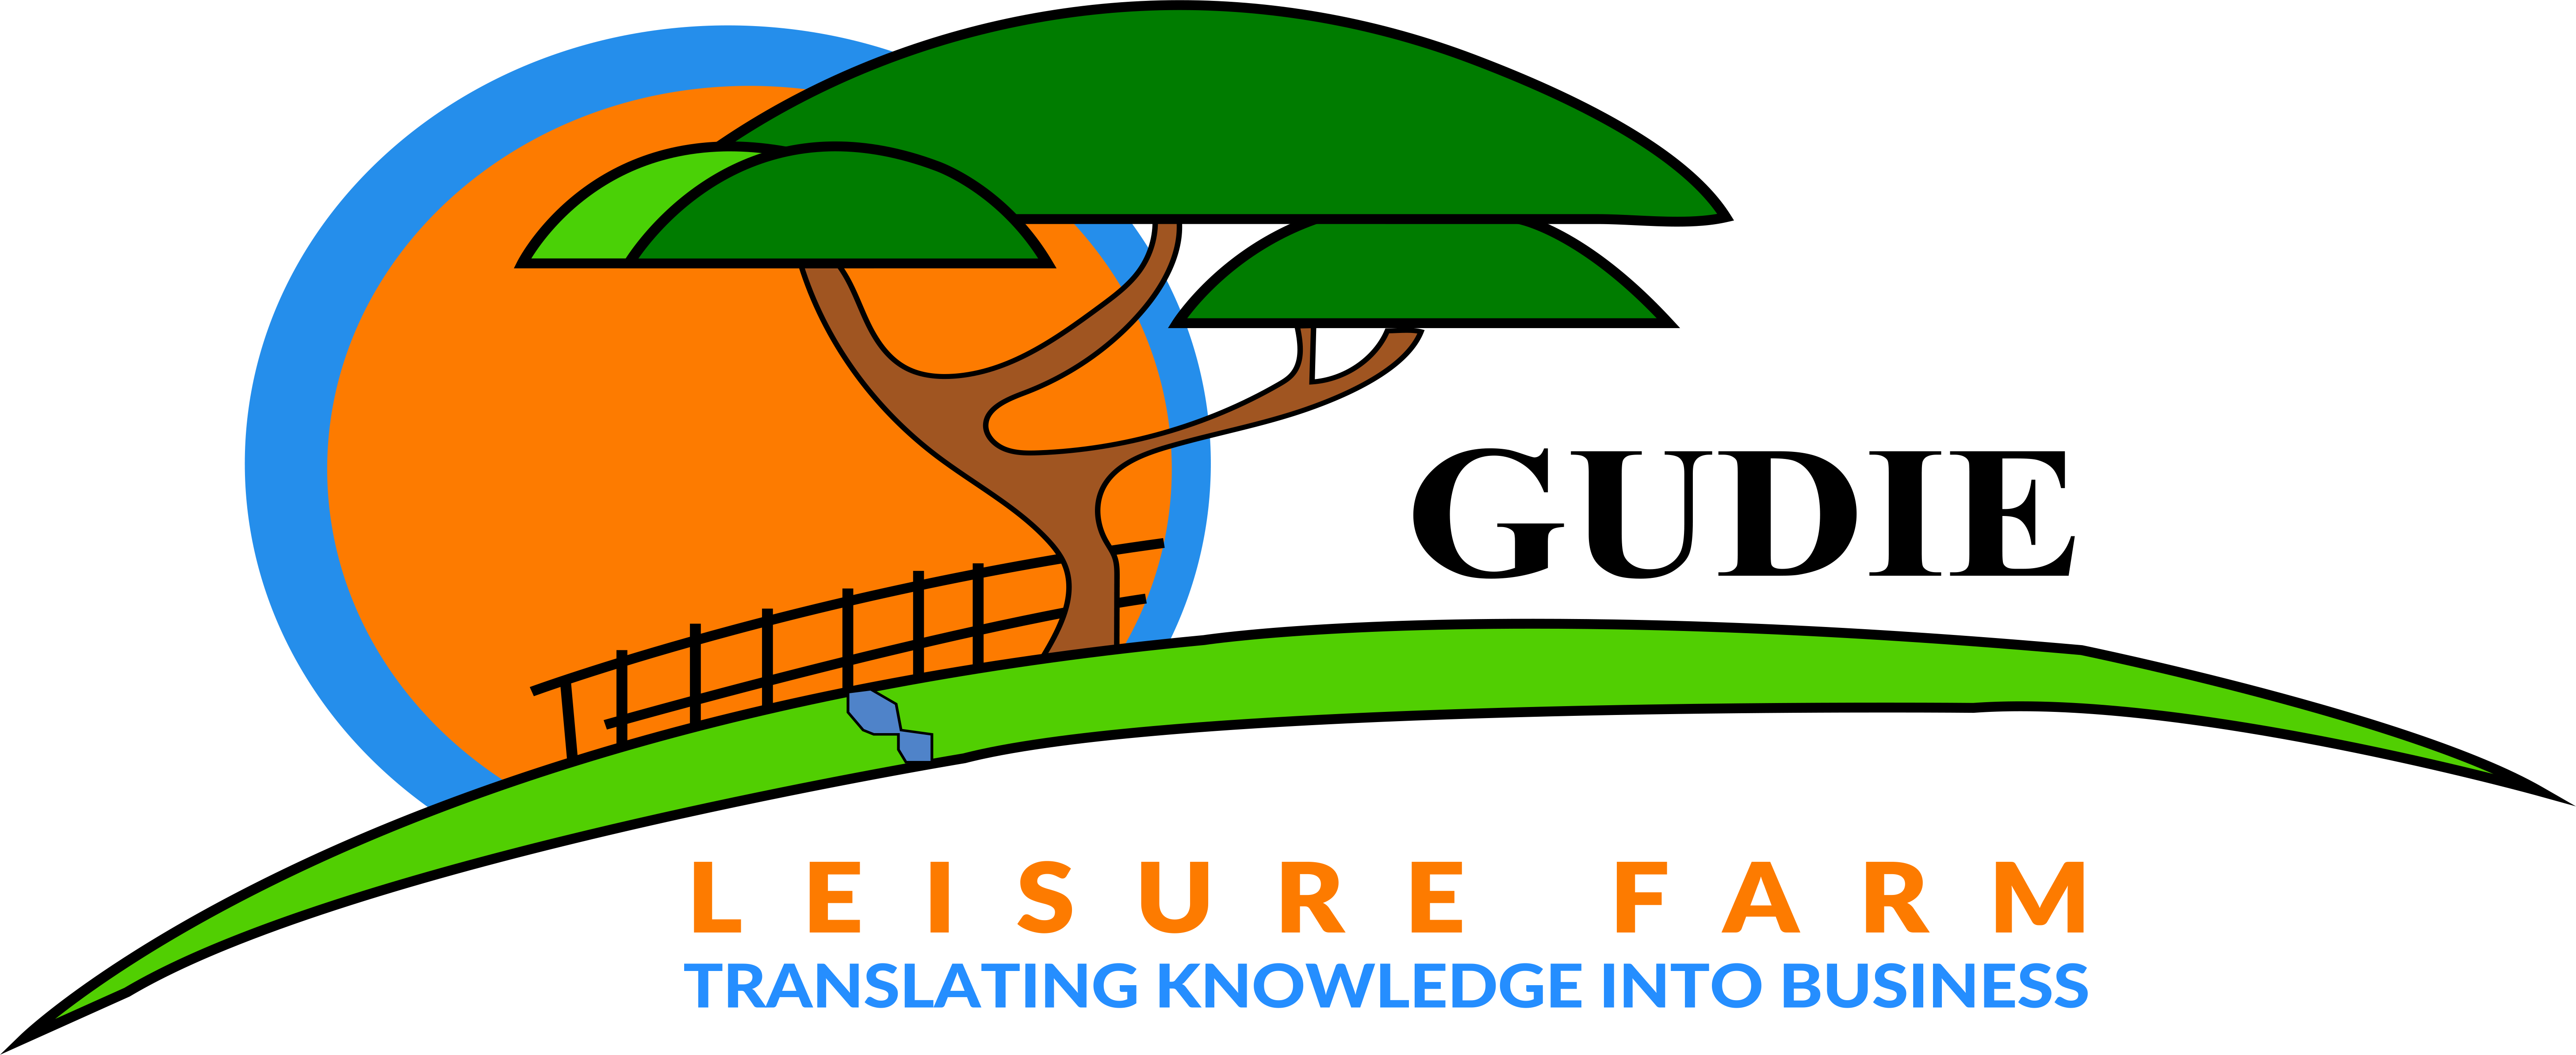 Gudie Leisure Farm Logo